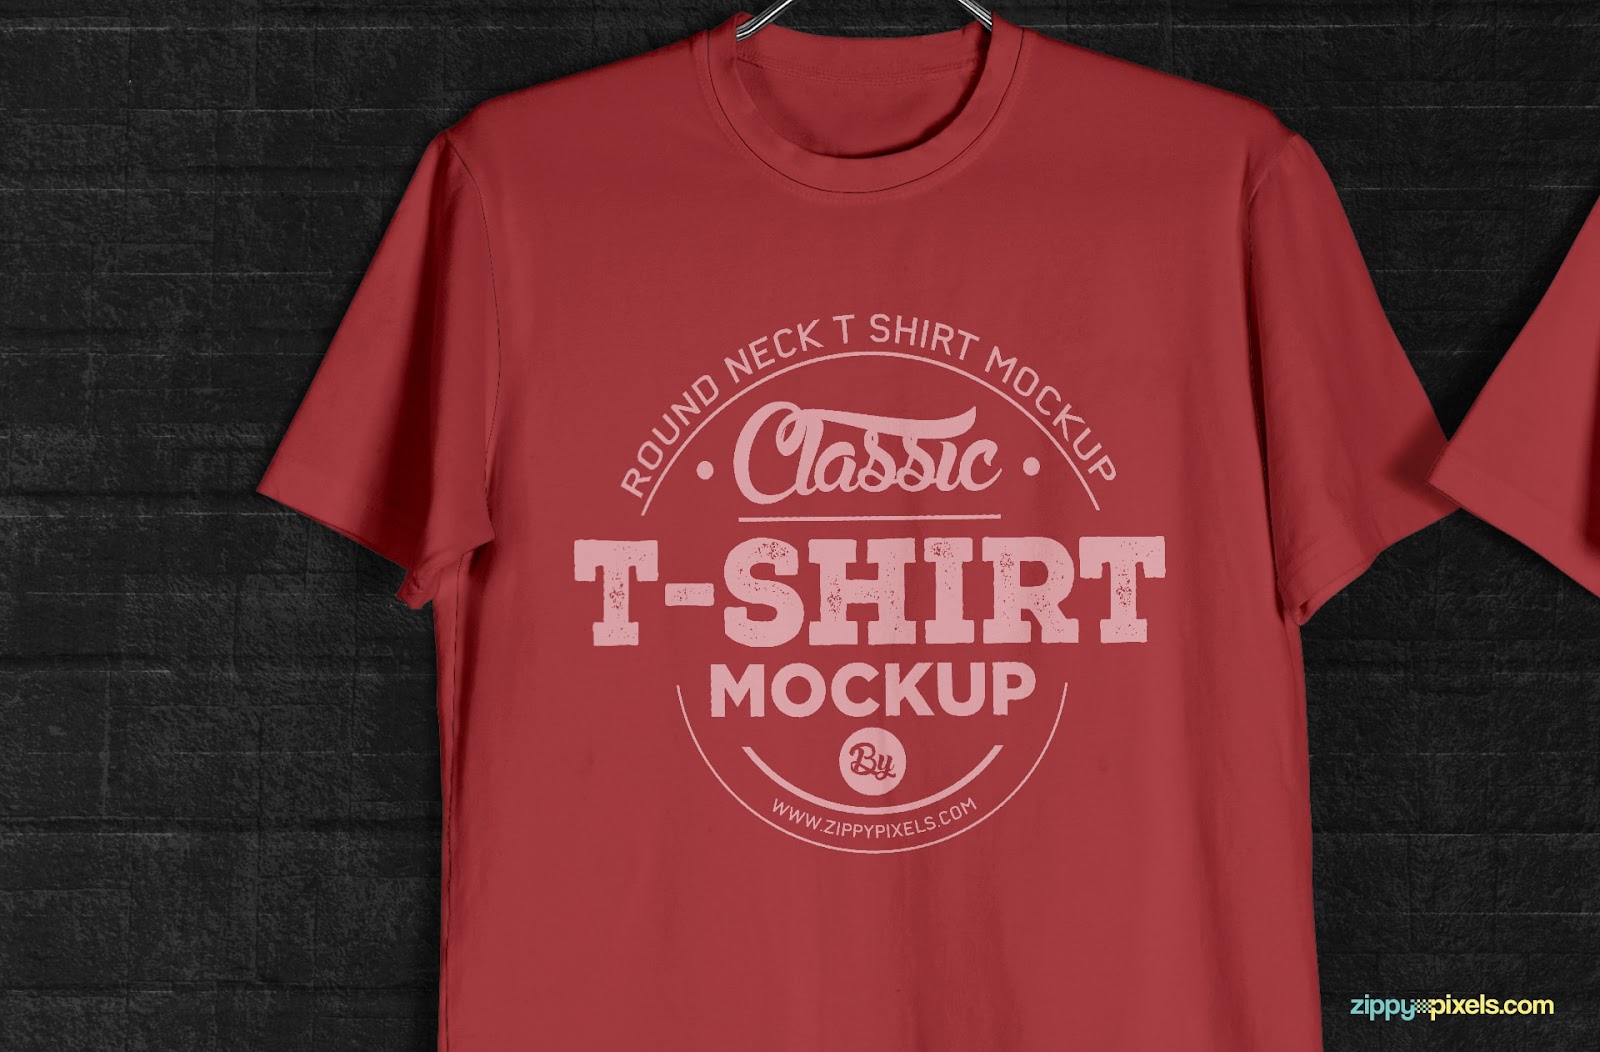 Download Flat T-Shirt Mockup Template Free Download - Free PSD ...